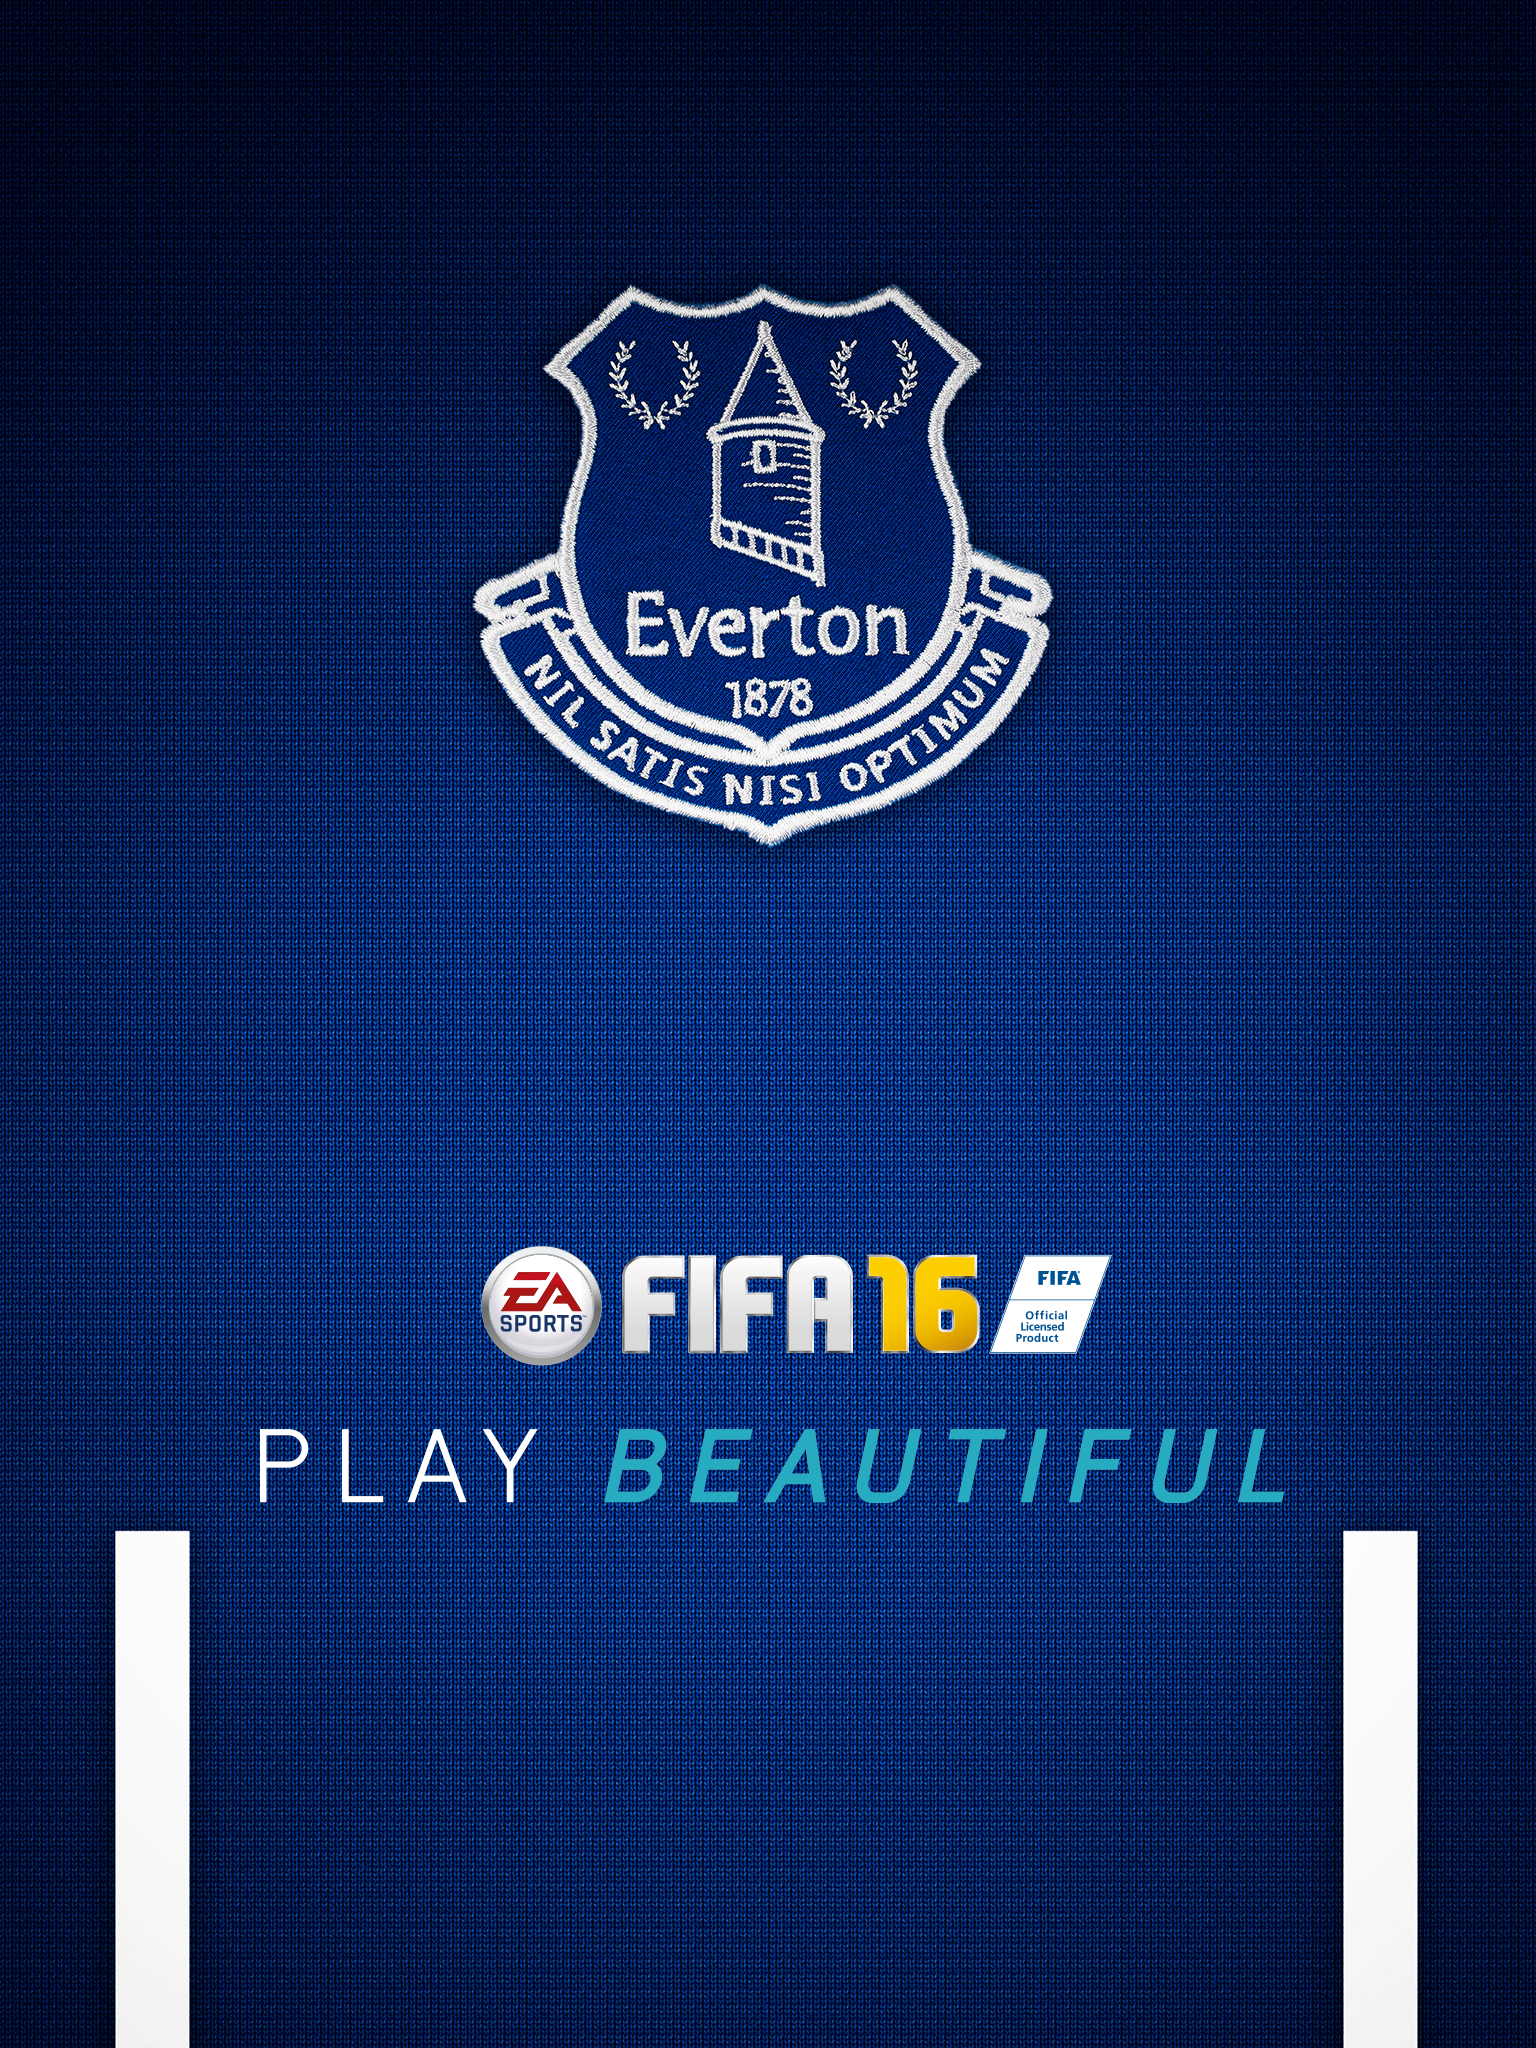 FIFA 16 | Everton Club Pack | EA SPORTS